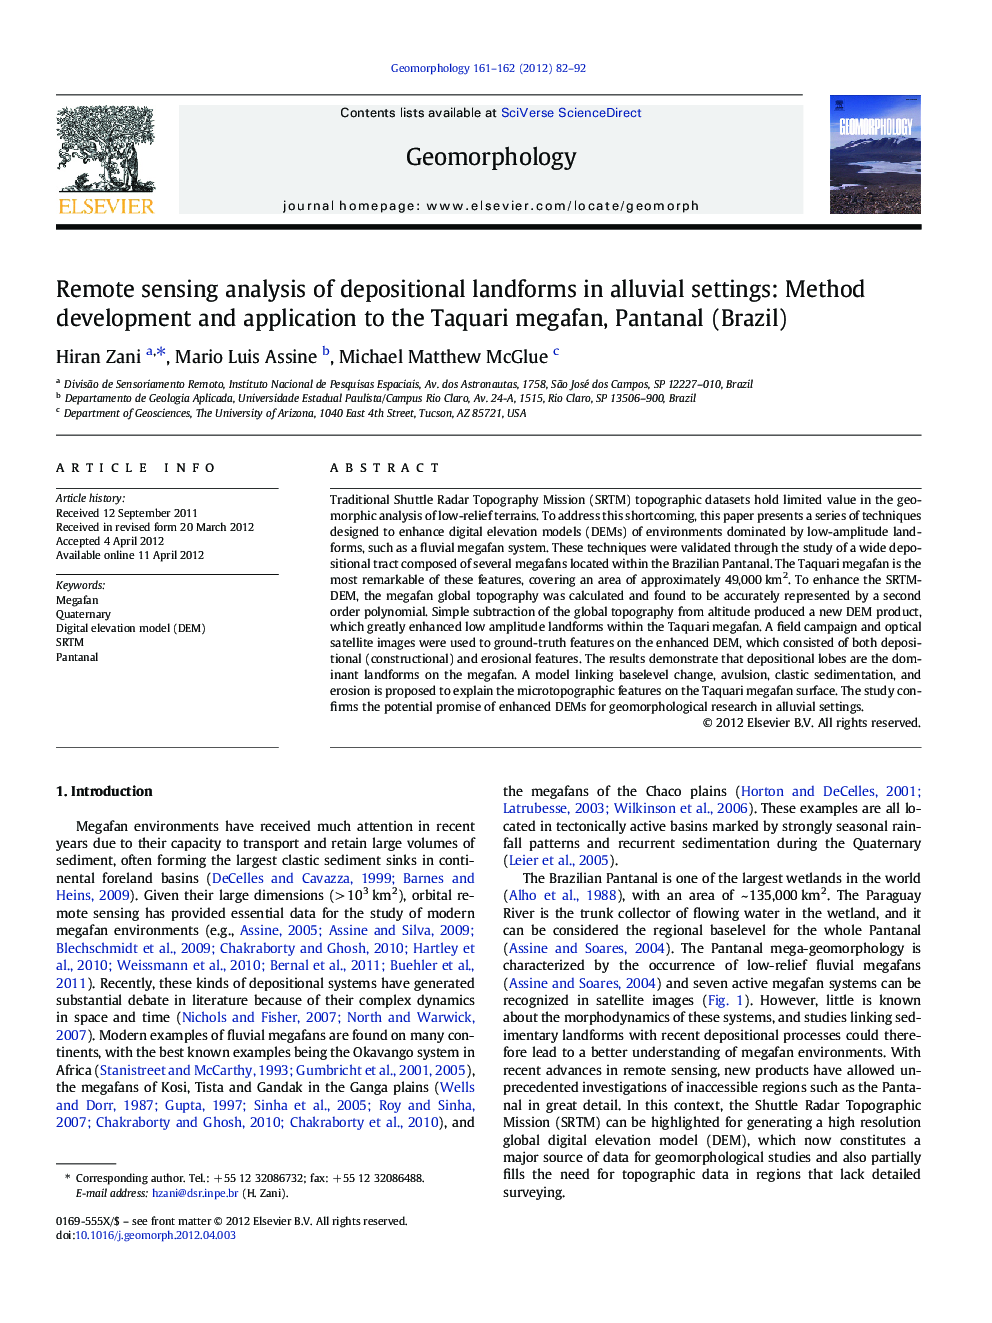 Remote sensing analysis of depositional landforms in alluvial settings: Method development and application to the Taquari megafan, Pantanal (Brazil)